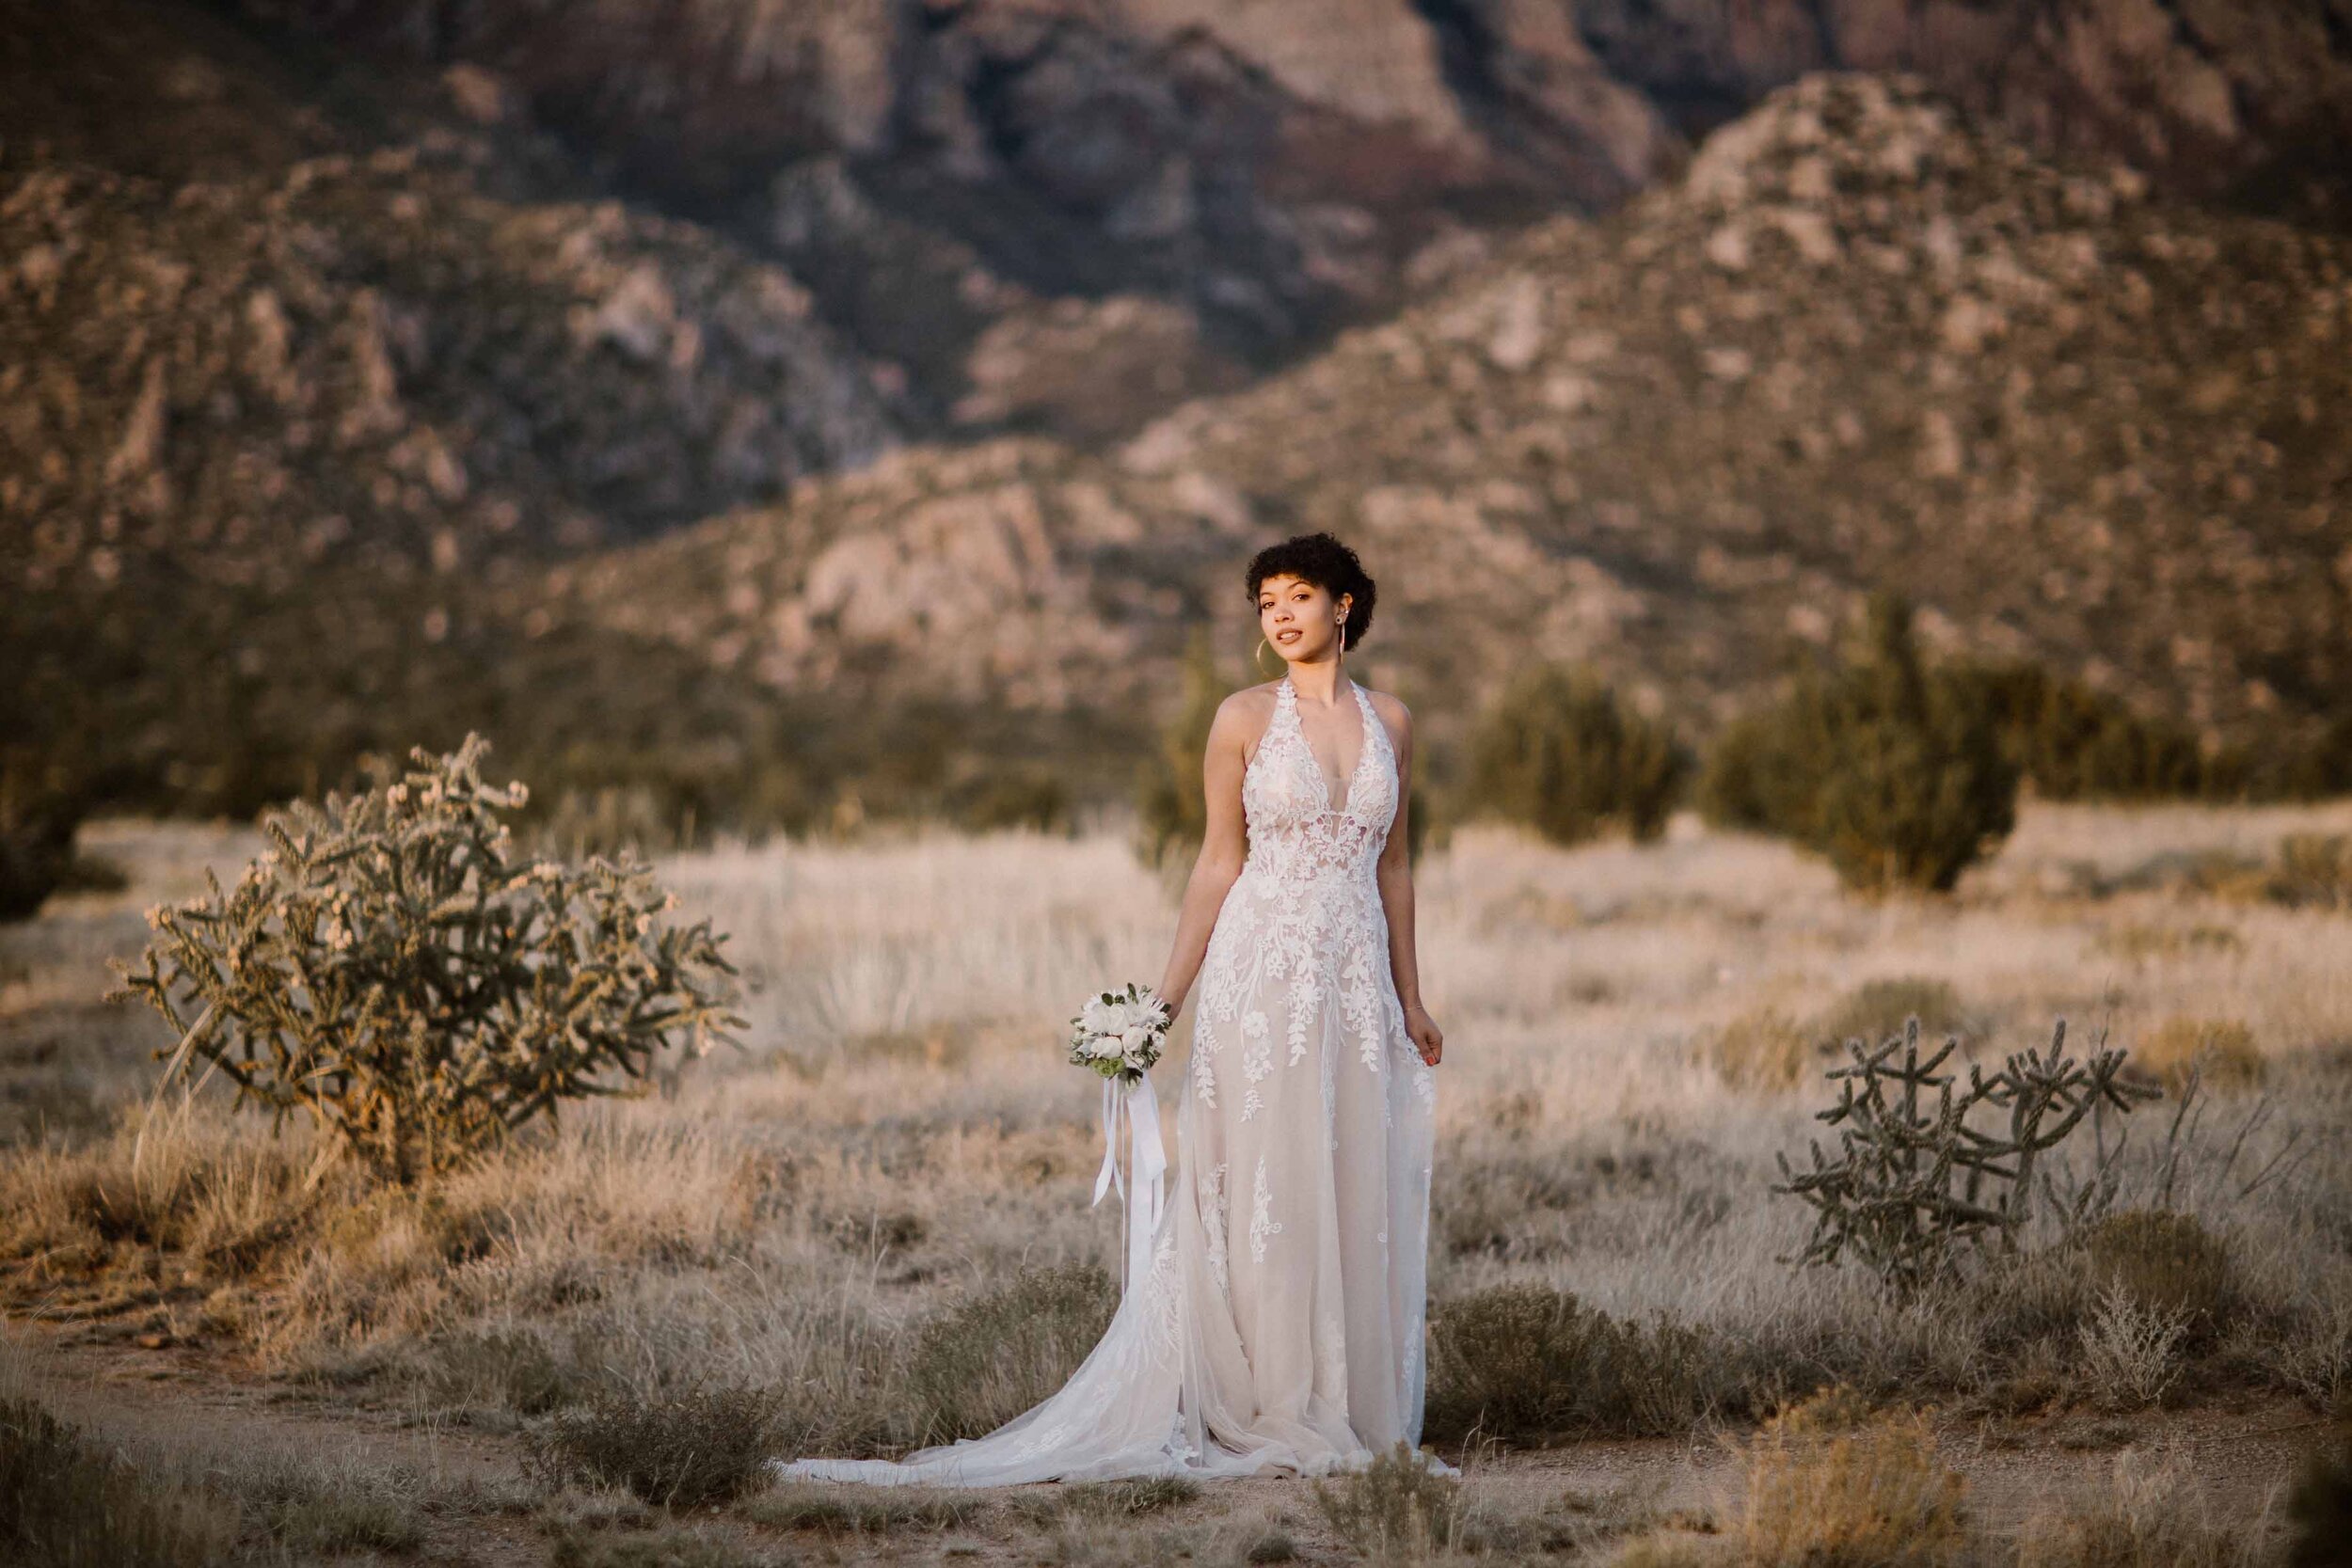 Wedding gown shot in Albuquerque foothills